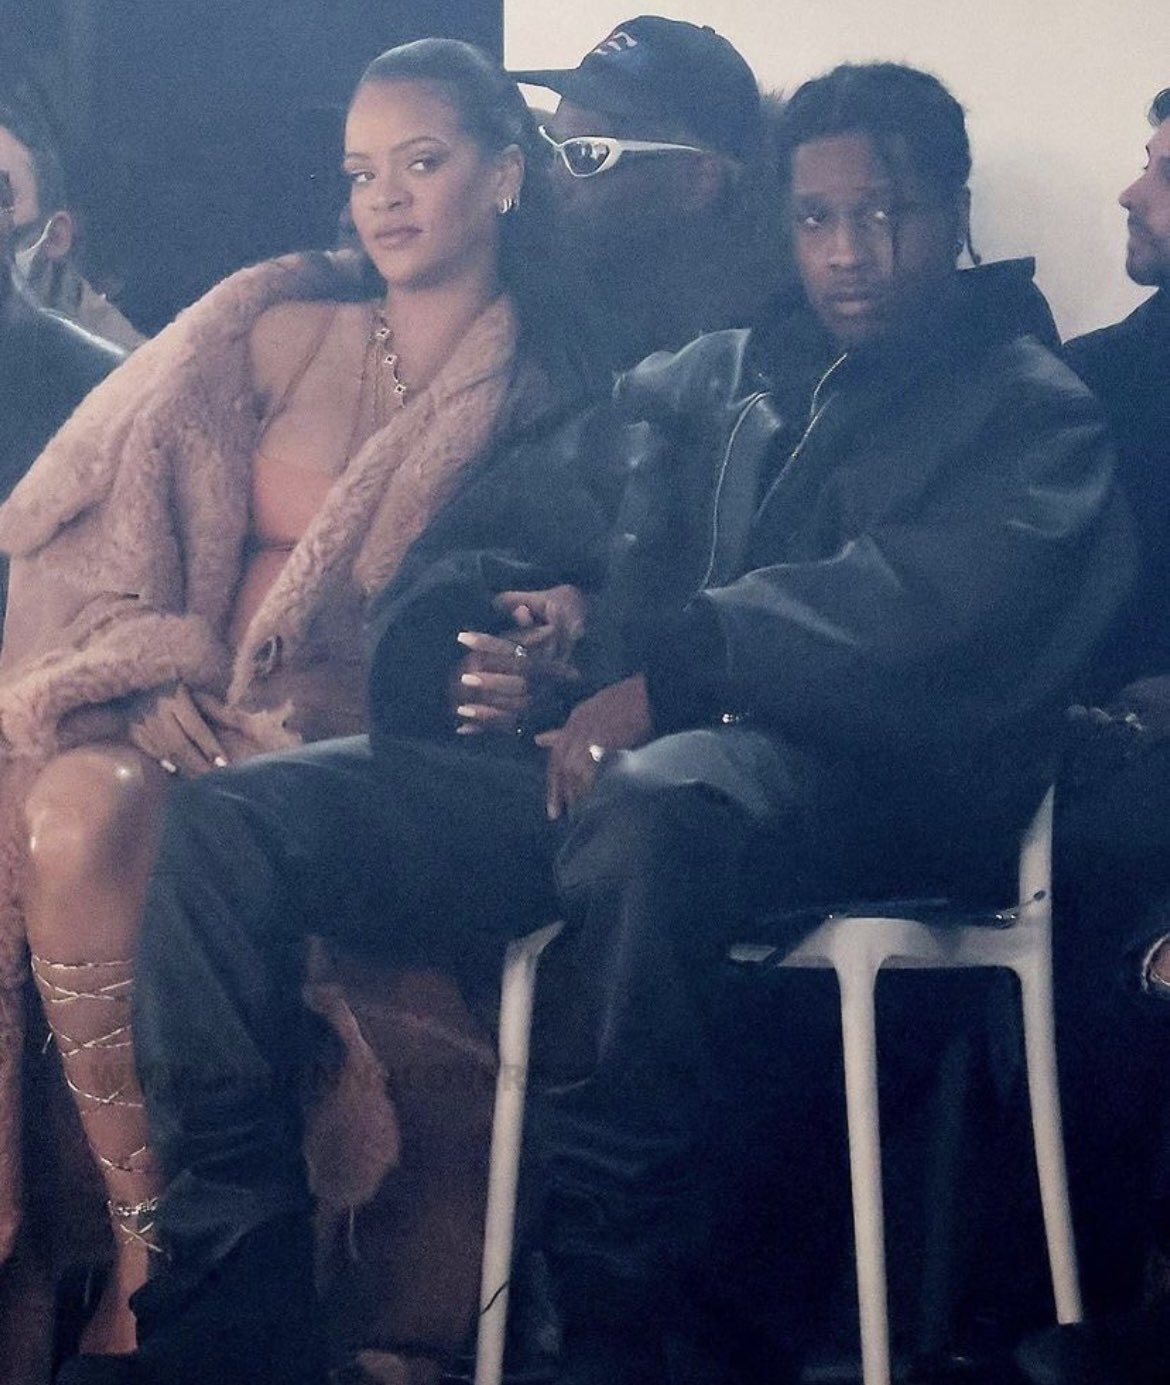 Rihanna on X: Rihanna and A$AP Rocky watching Kendall Jenner boring ass on  the runway  / X